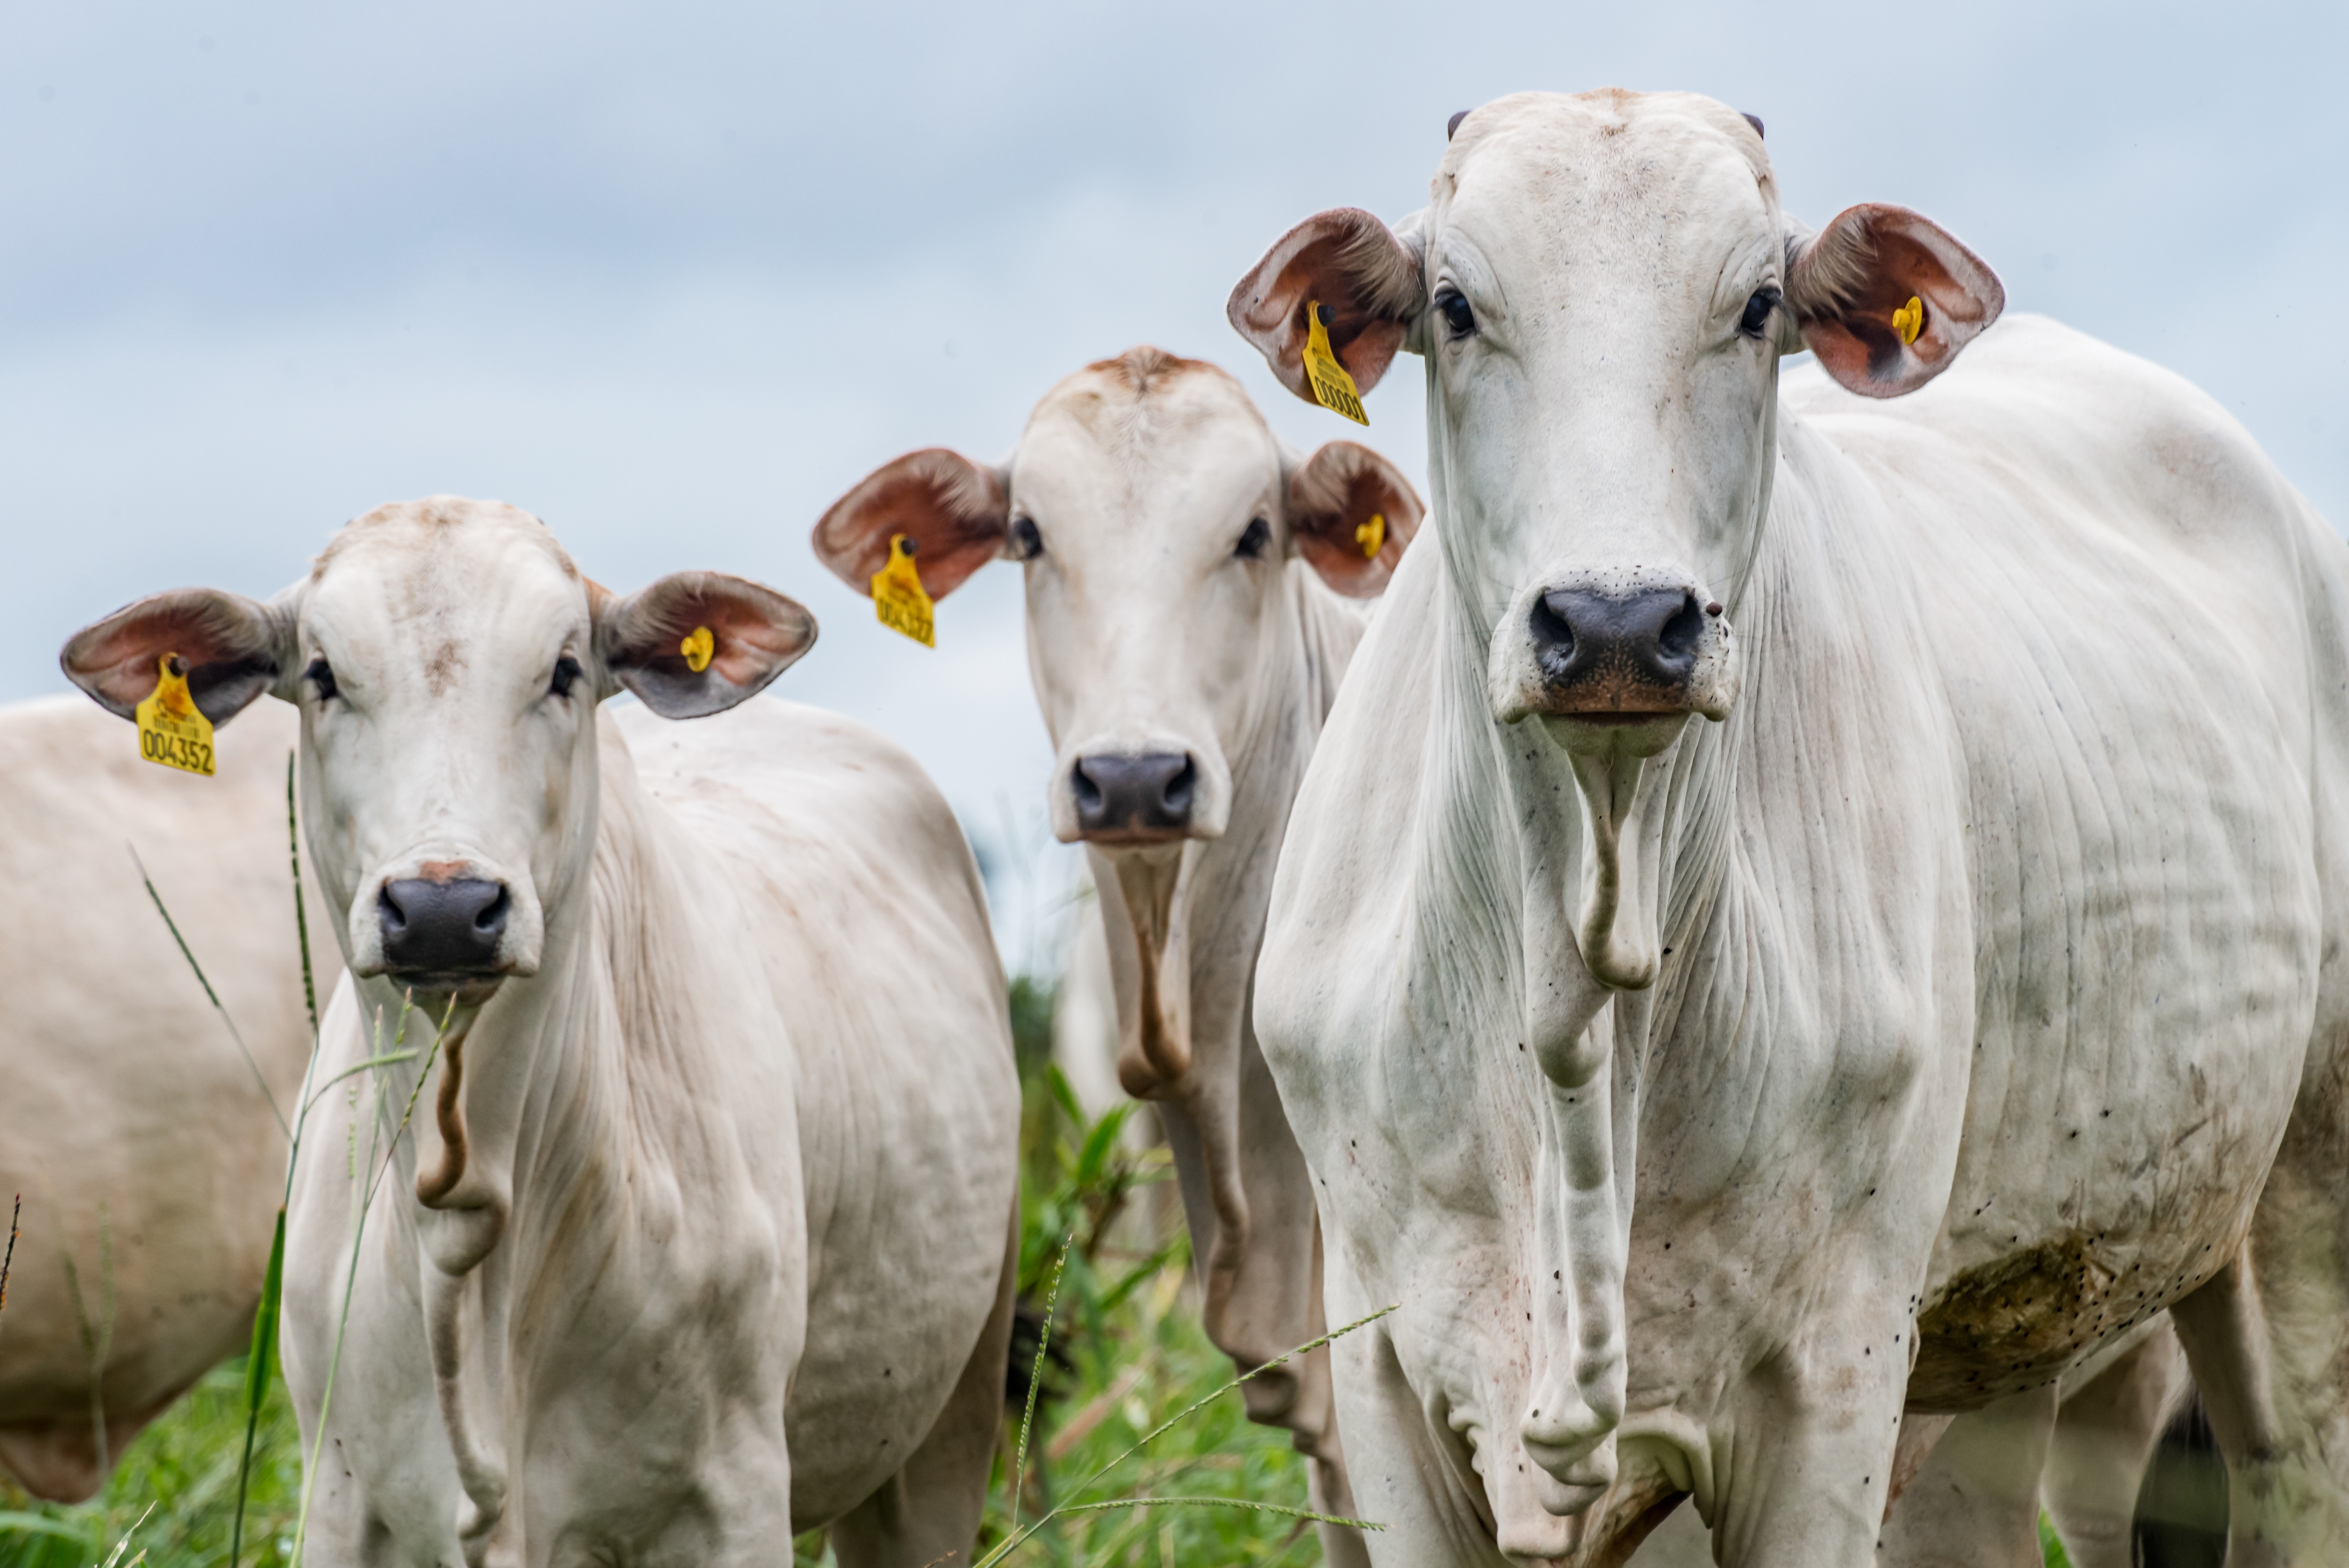 Abate de bovinos sobe 24,1% no 1º trimestre, informa IBGE